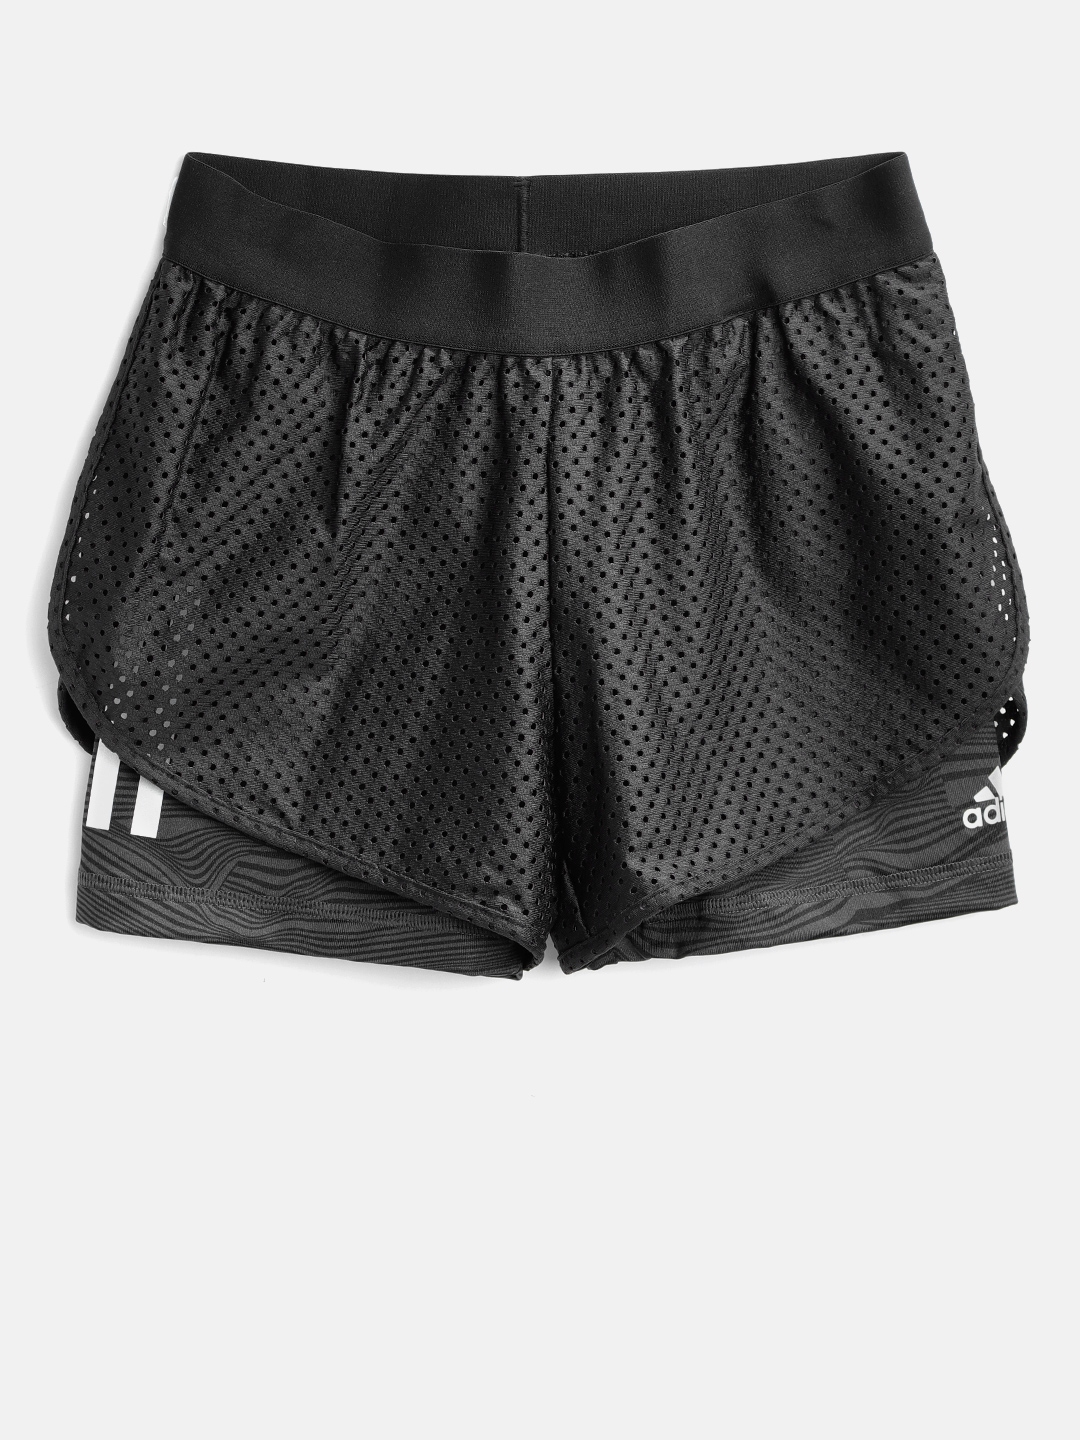 adidas originals Pre Game Short Casual Running Sports Shorts Black FM1 -  KICKS CREW